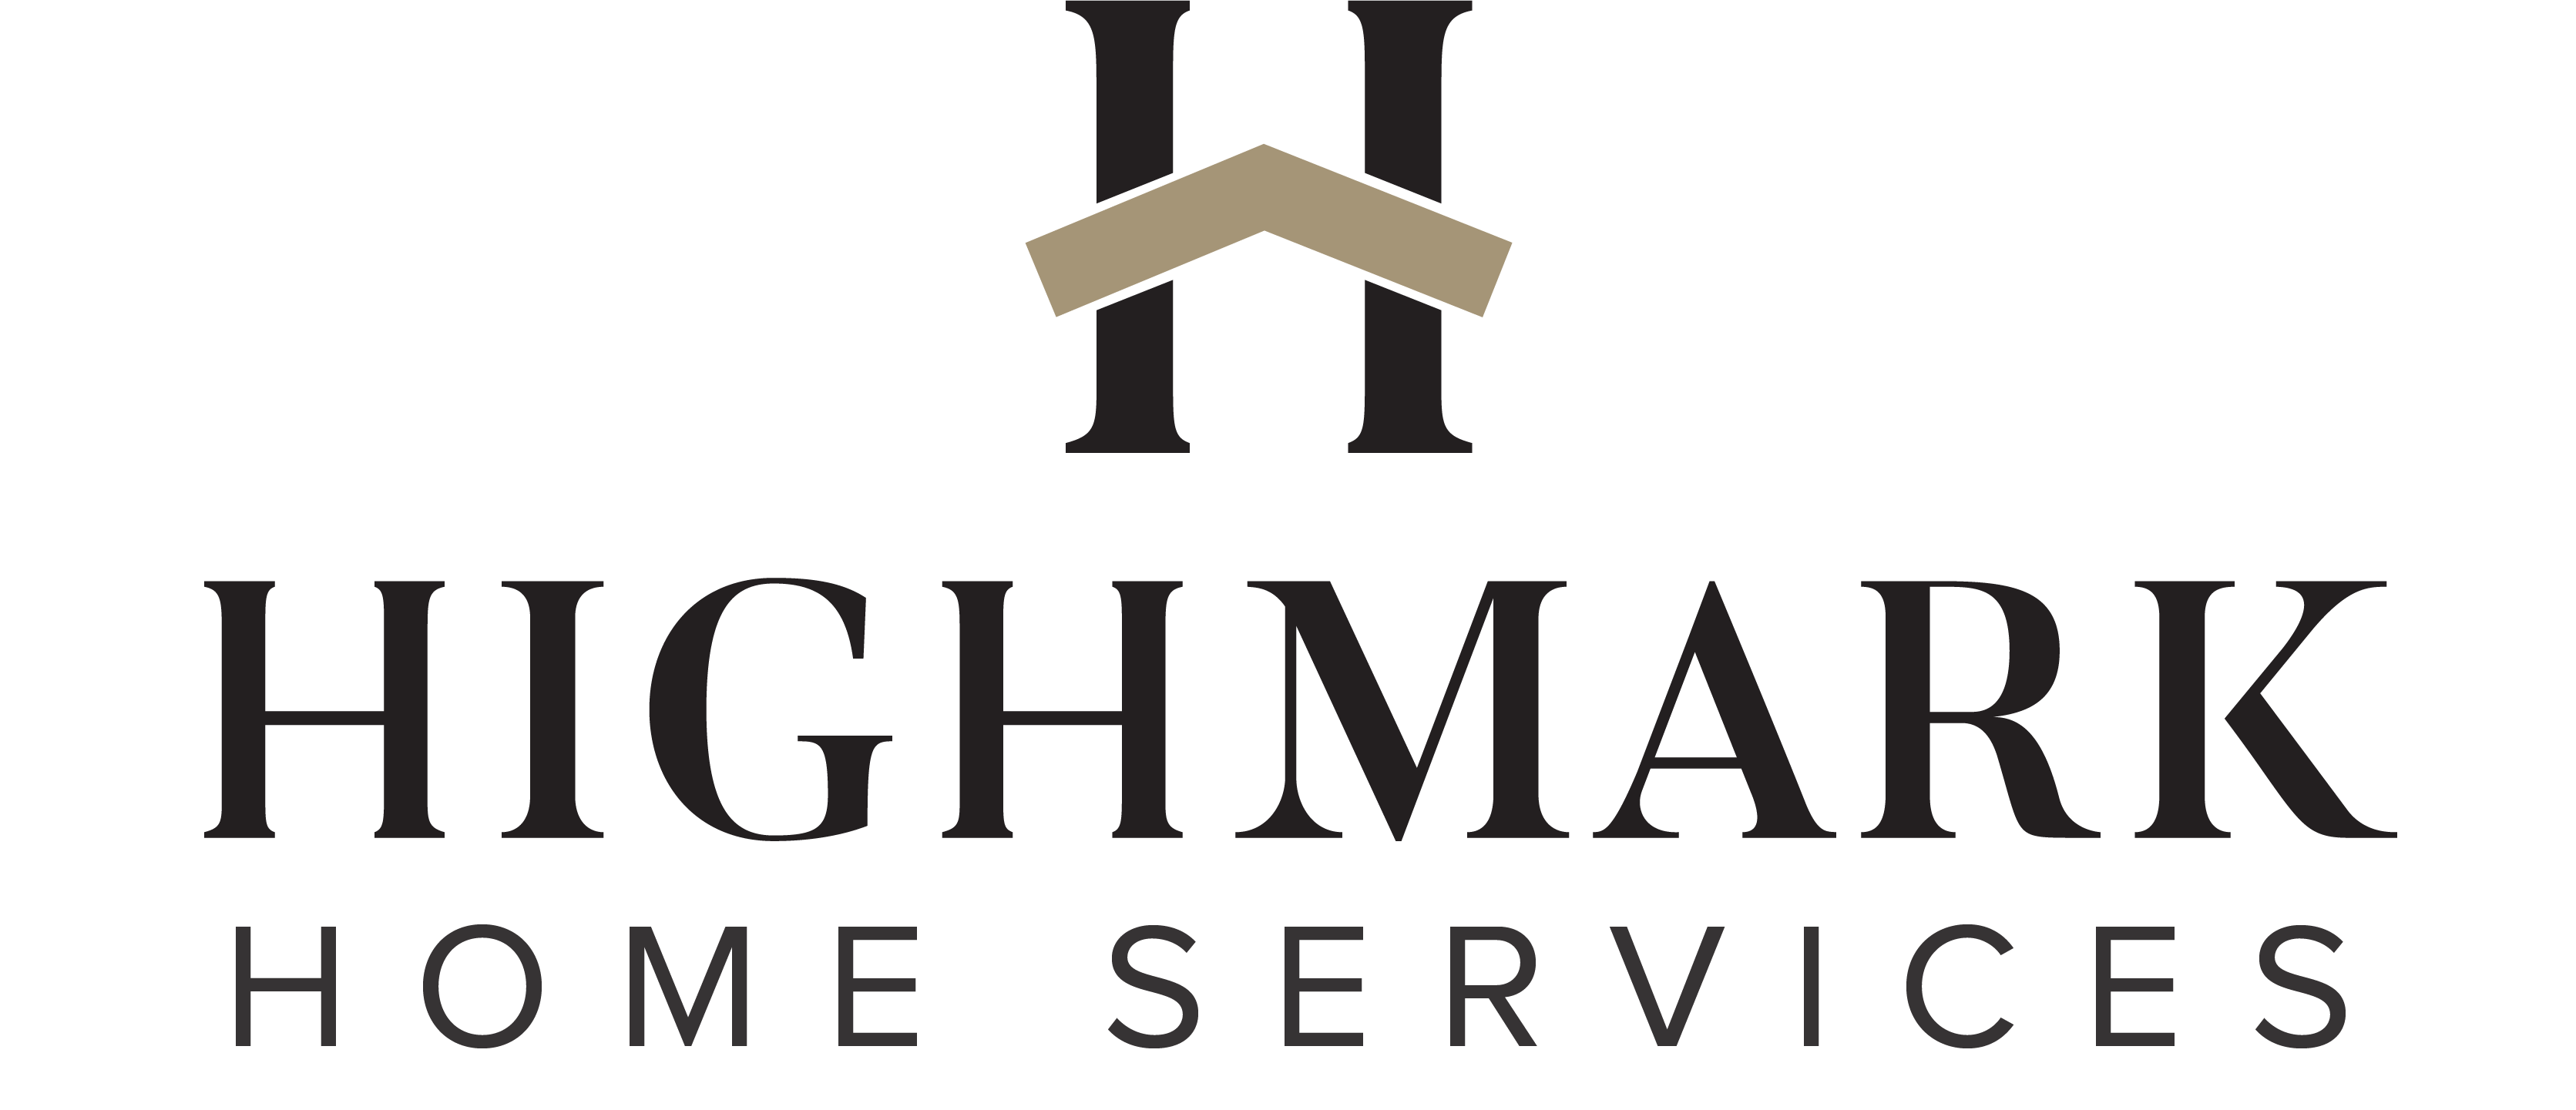 Exteriors by Highmark logo.